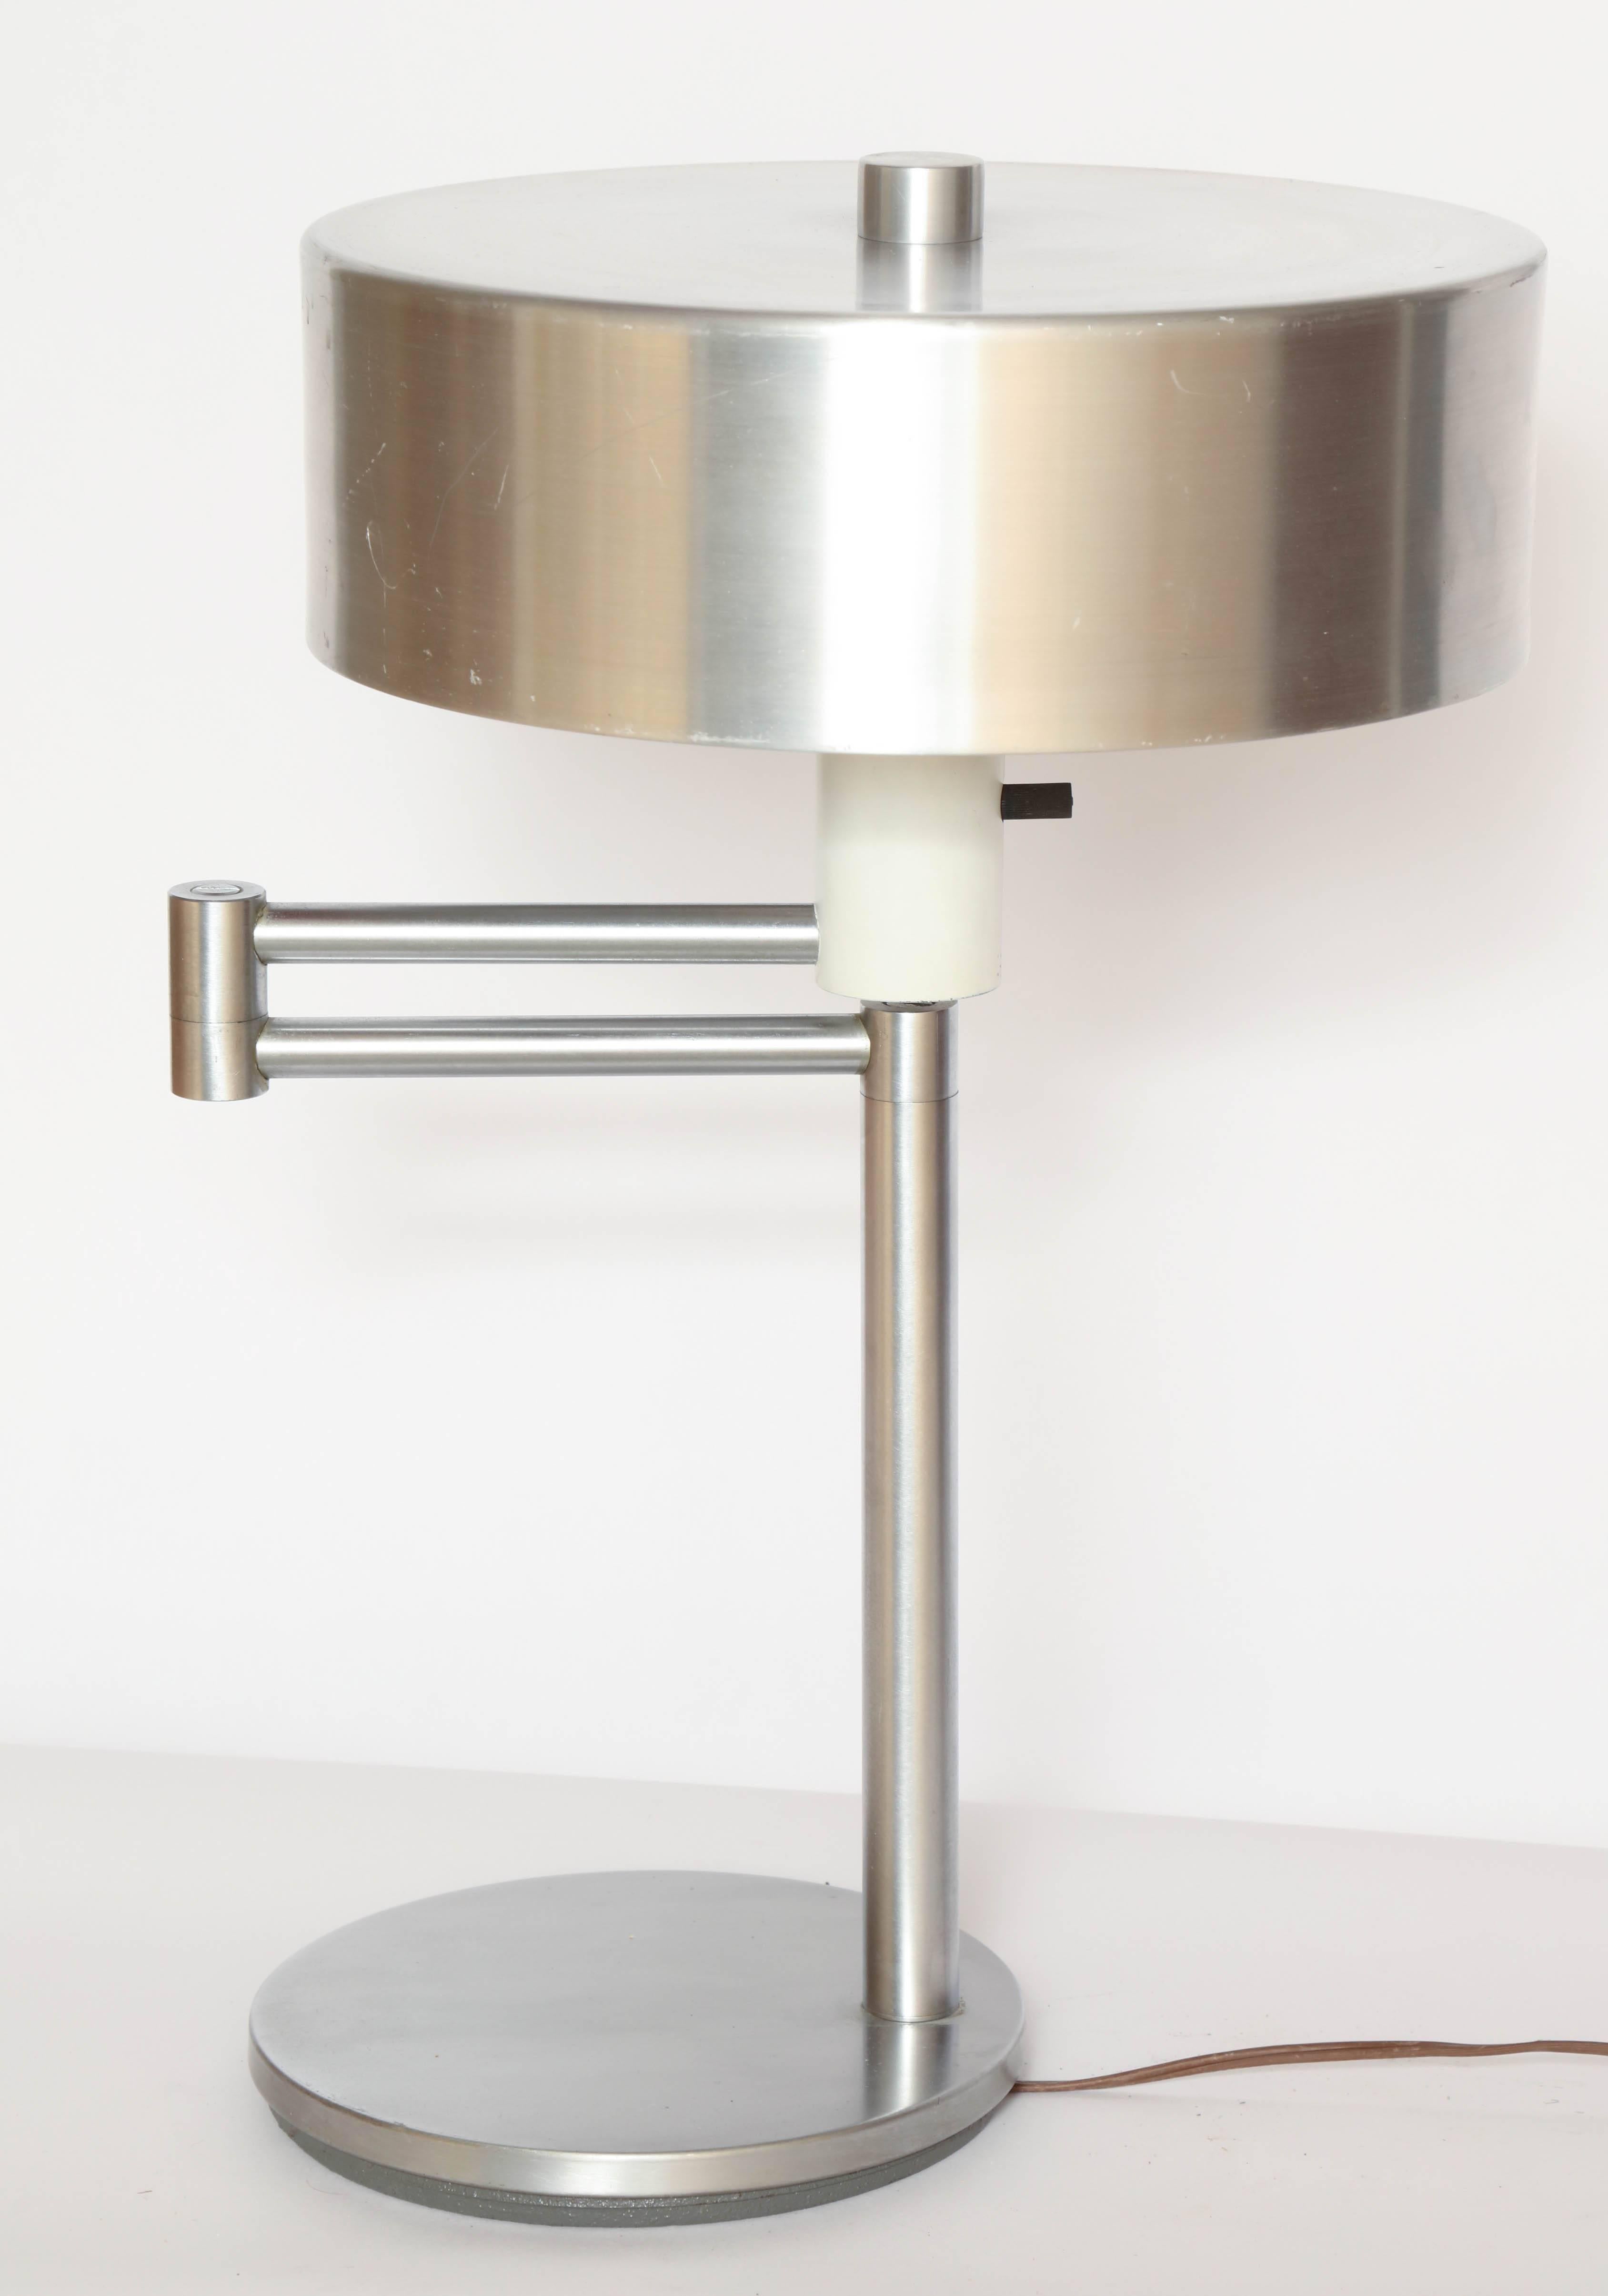 Walter VonNessen, 1930s, American modern articulated table lamp.